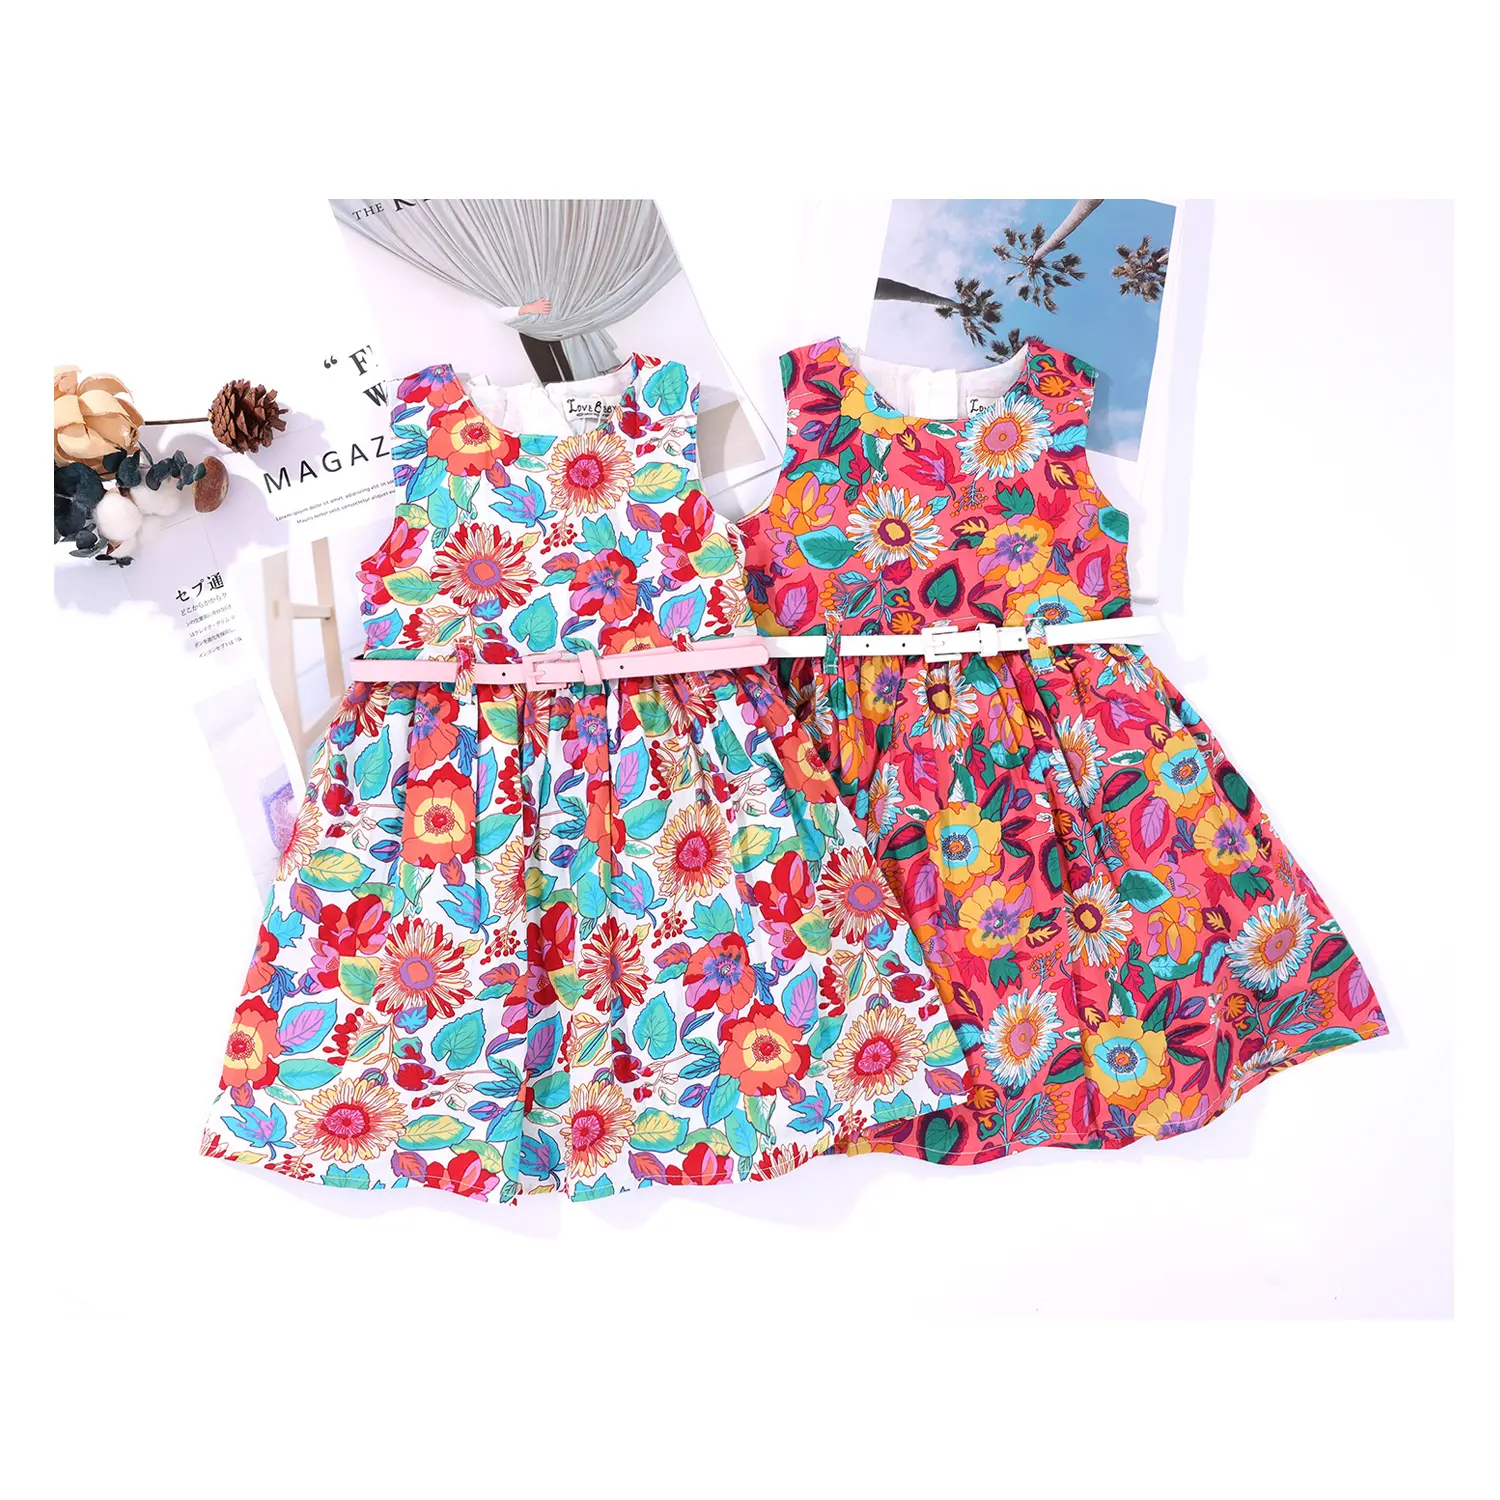 New style summer dress 2022 High Quality casual a-line skirt 100% cotton girls baby girls cotton sleeveless sweet dress